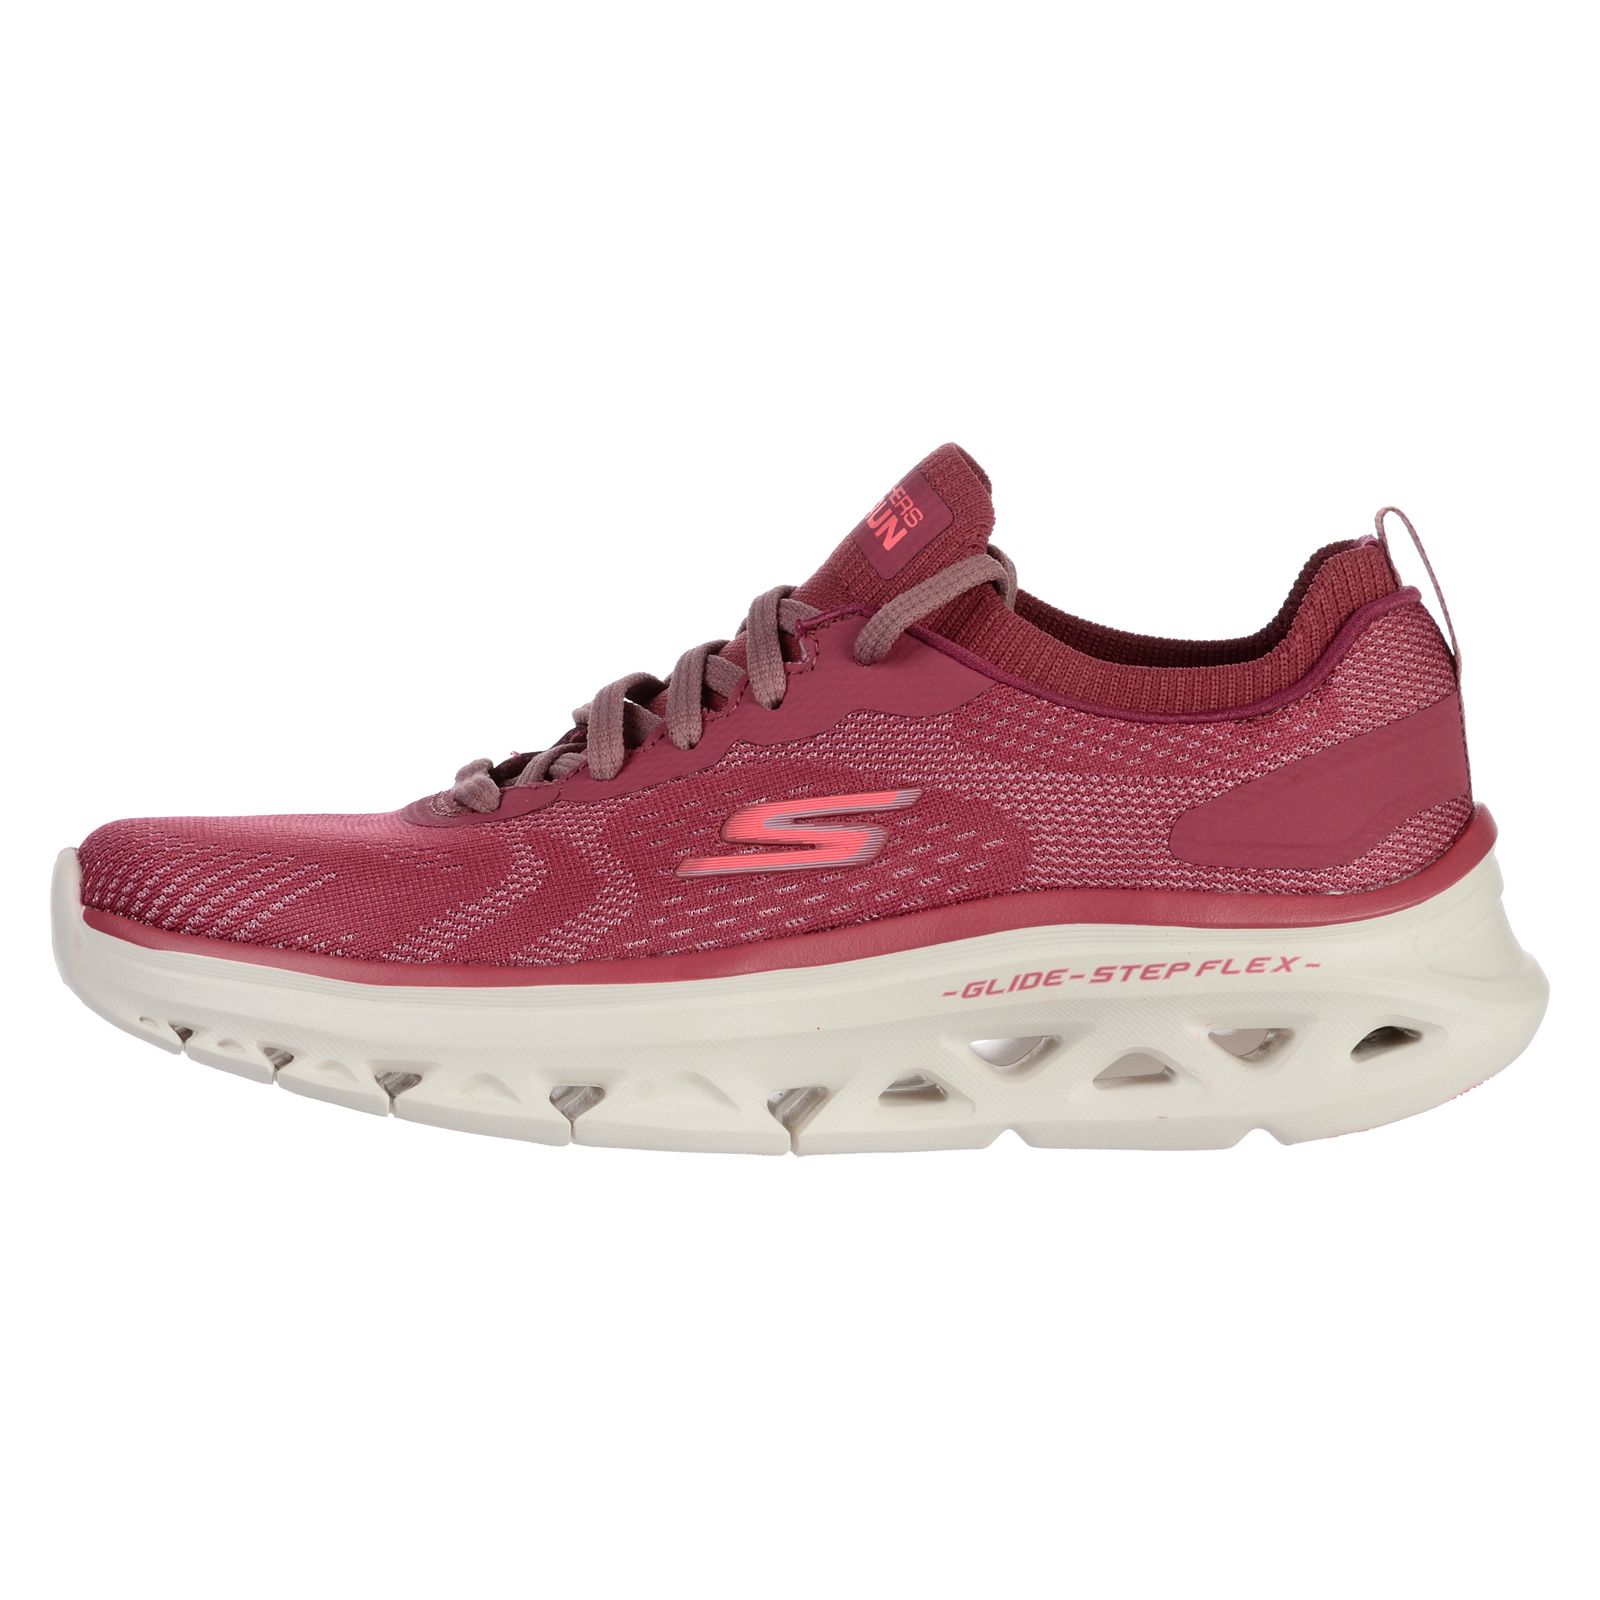 Pantofi sport SKECHERS pentru femei GO RUN GLIDE-STEP FLEX - SKYL - 128892ROS